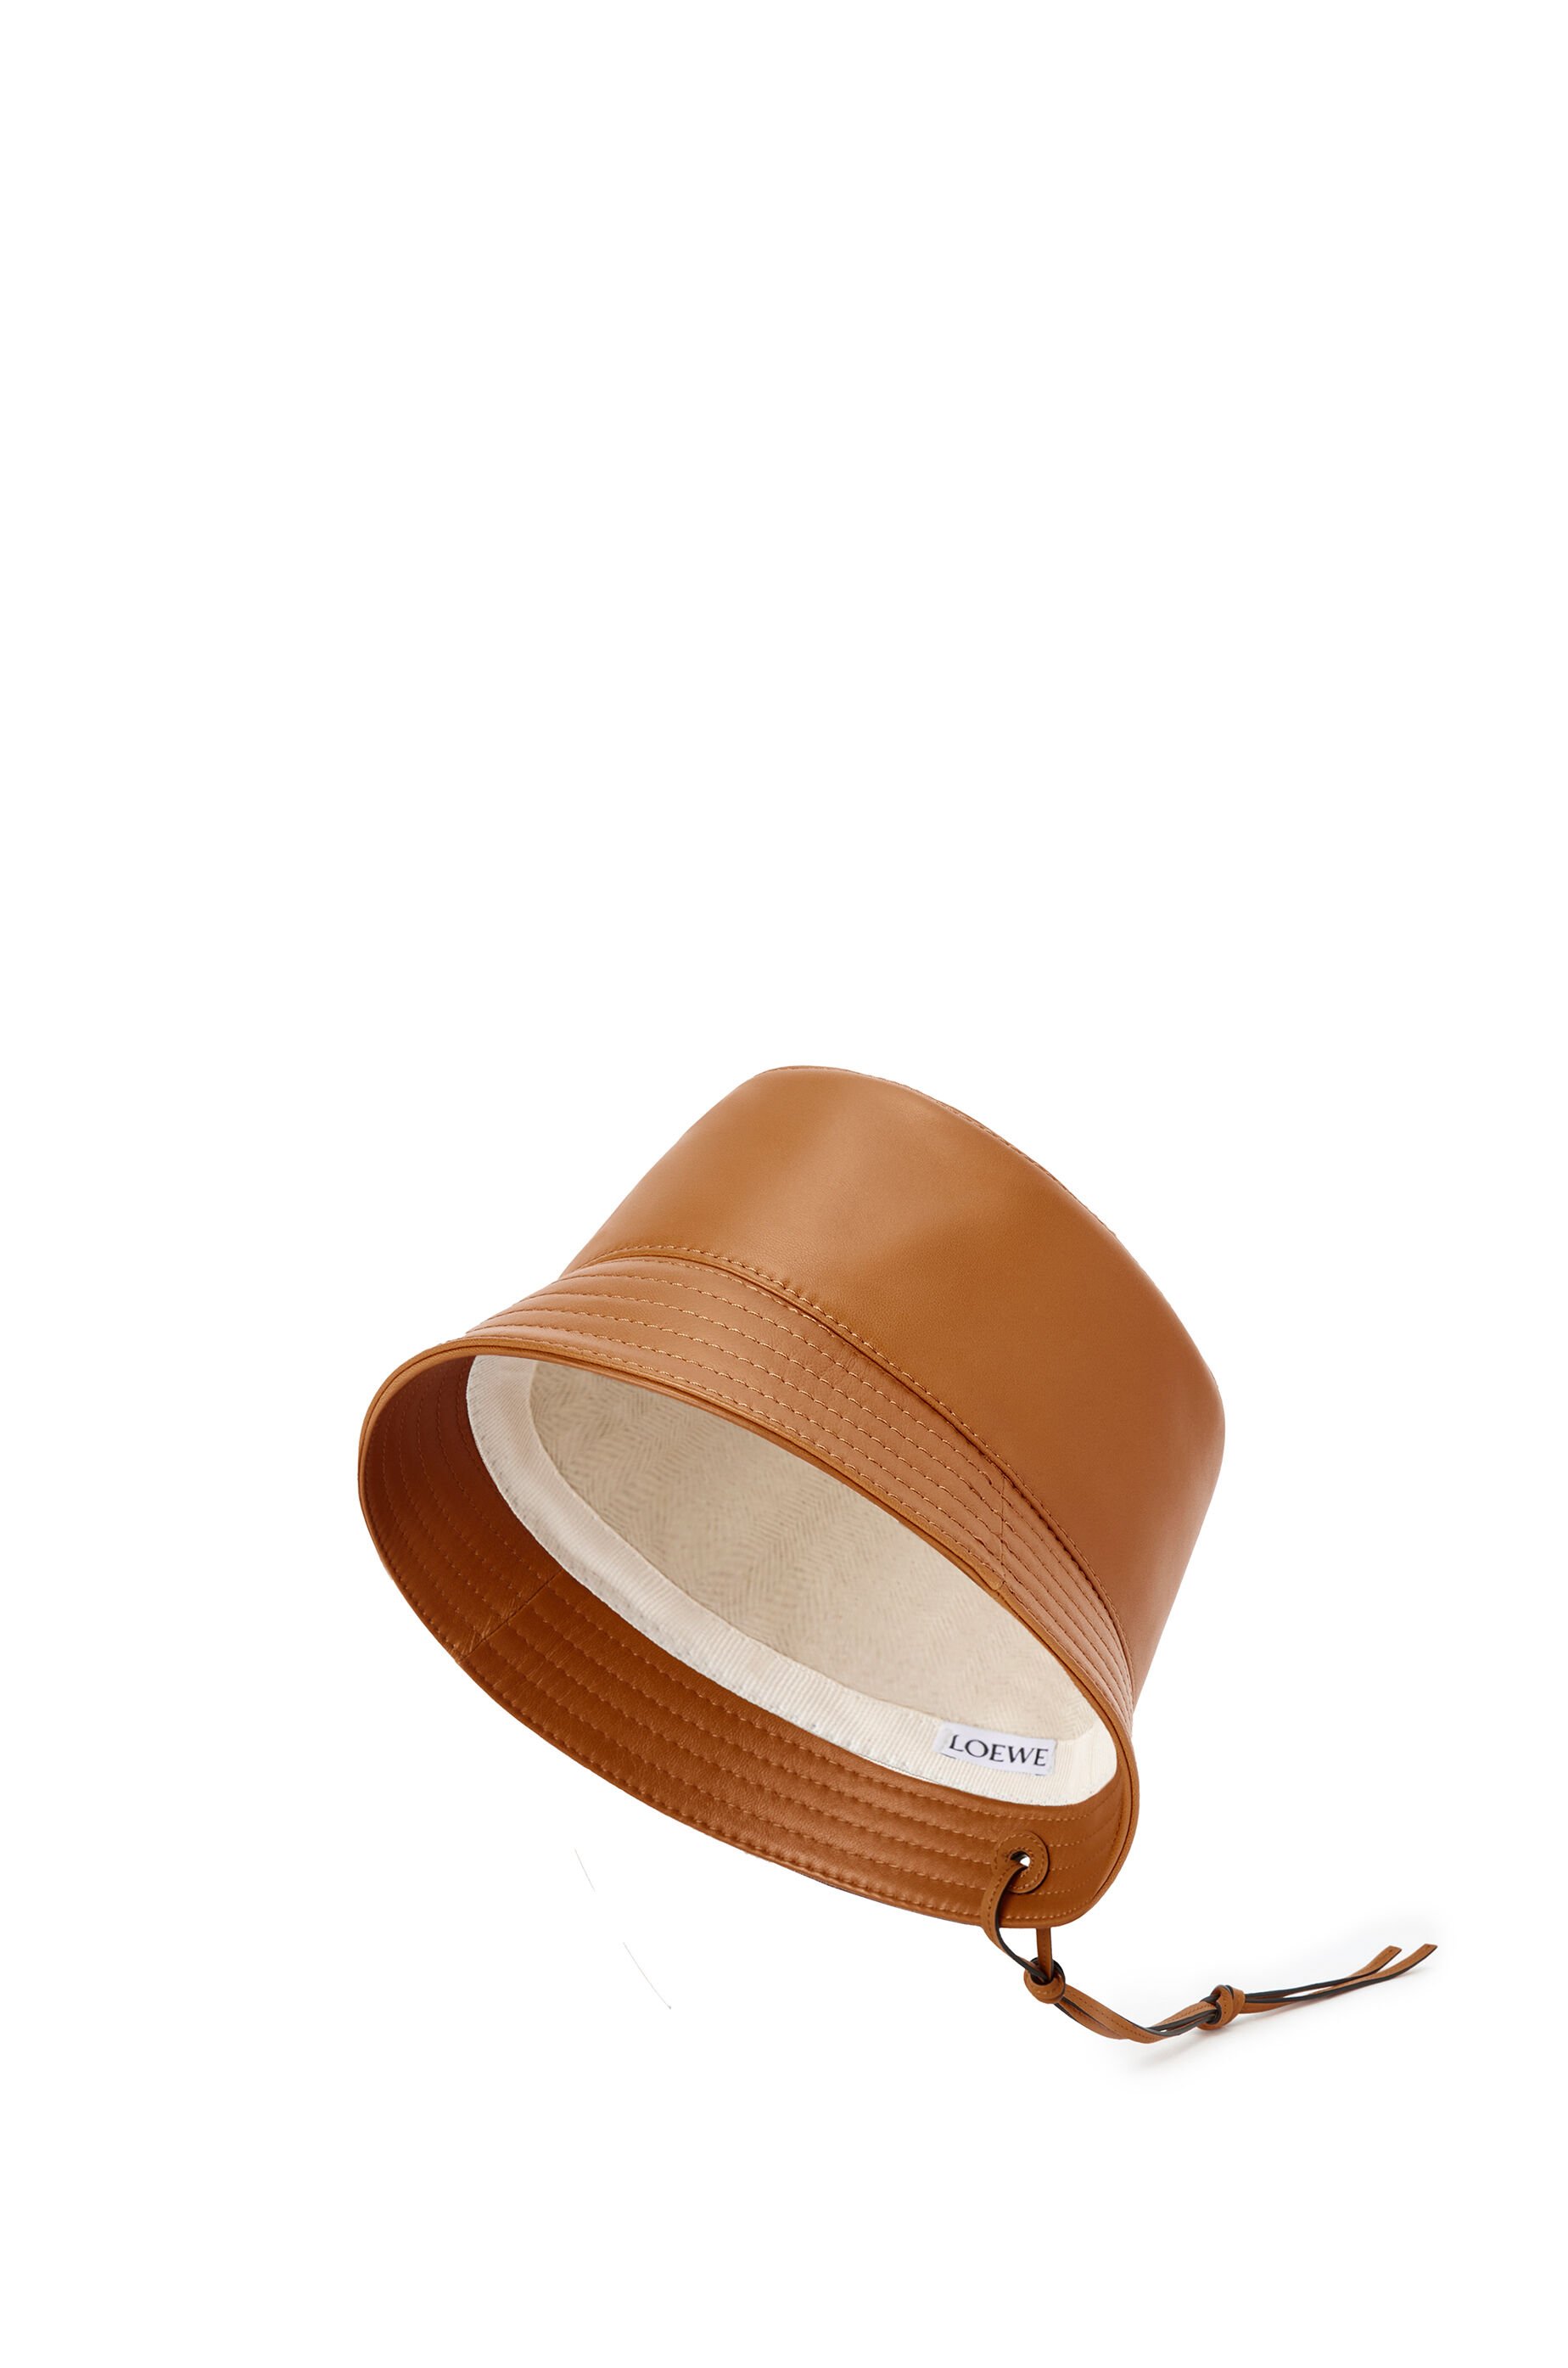 Luxury Bucket hat in denim calfskin for female Size LOEWE Donna Accessori Cappelli e copricapo Cappelli Cappello Bucket Denim/Calf 57 Material 